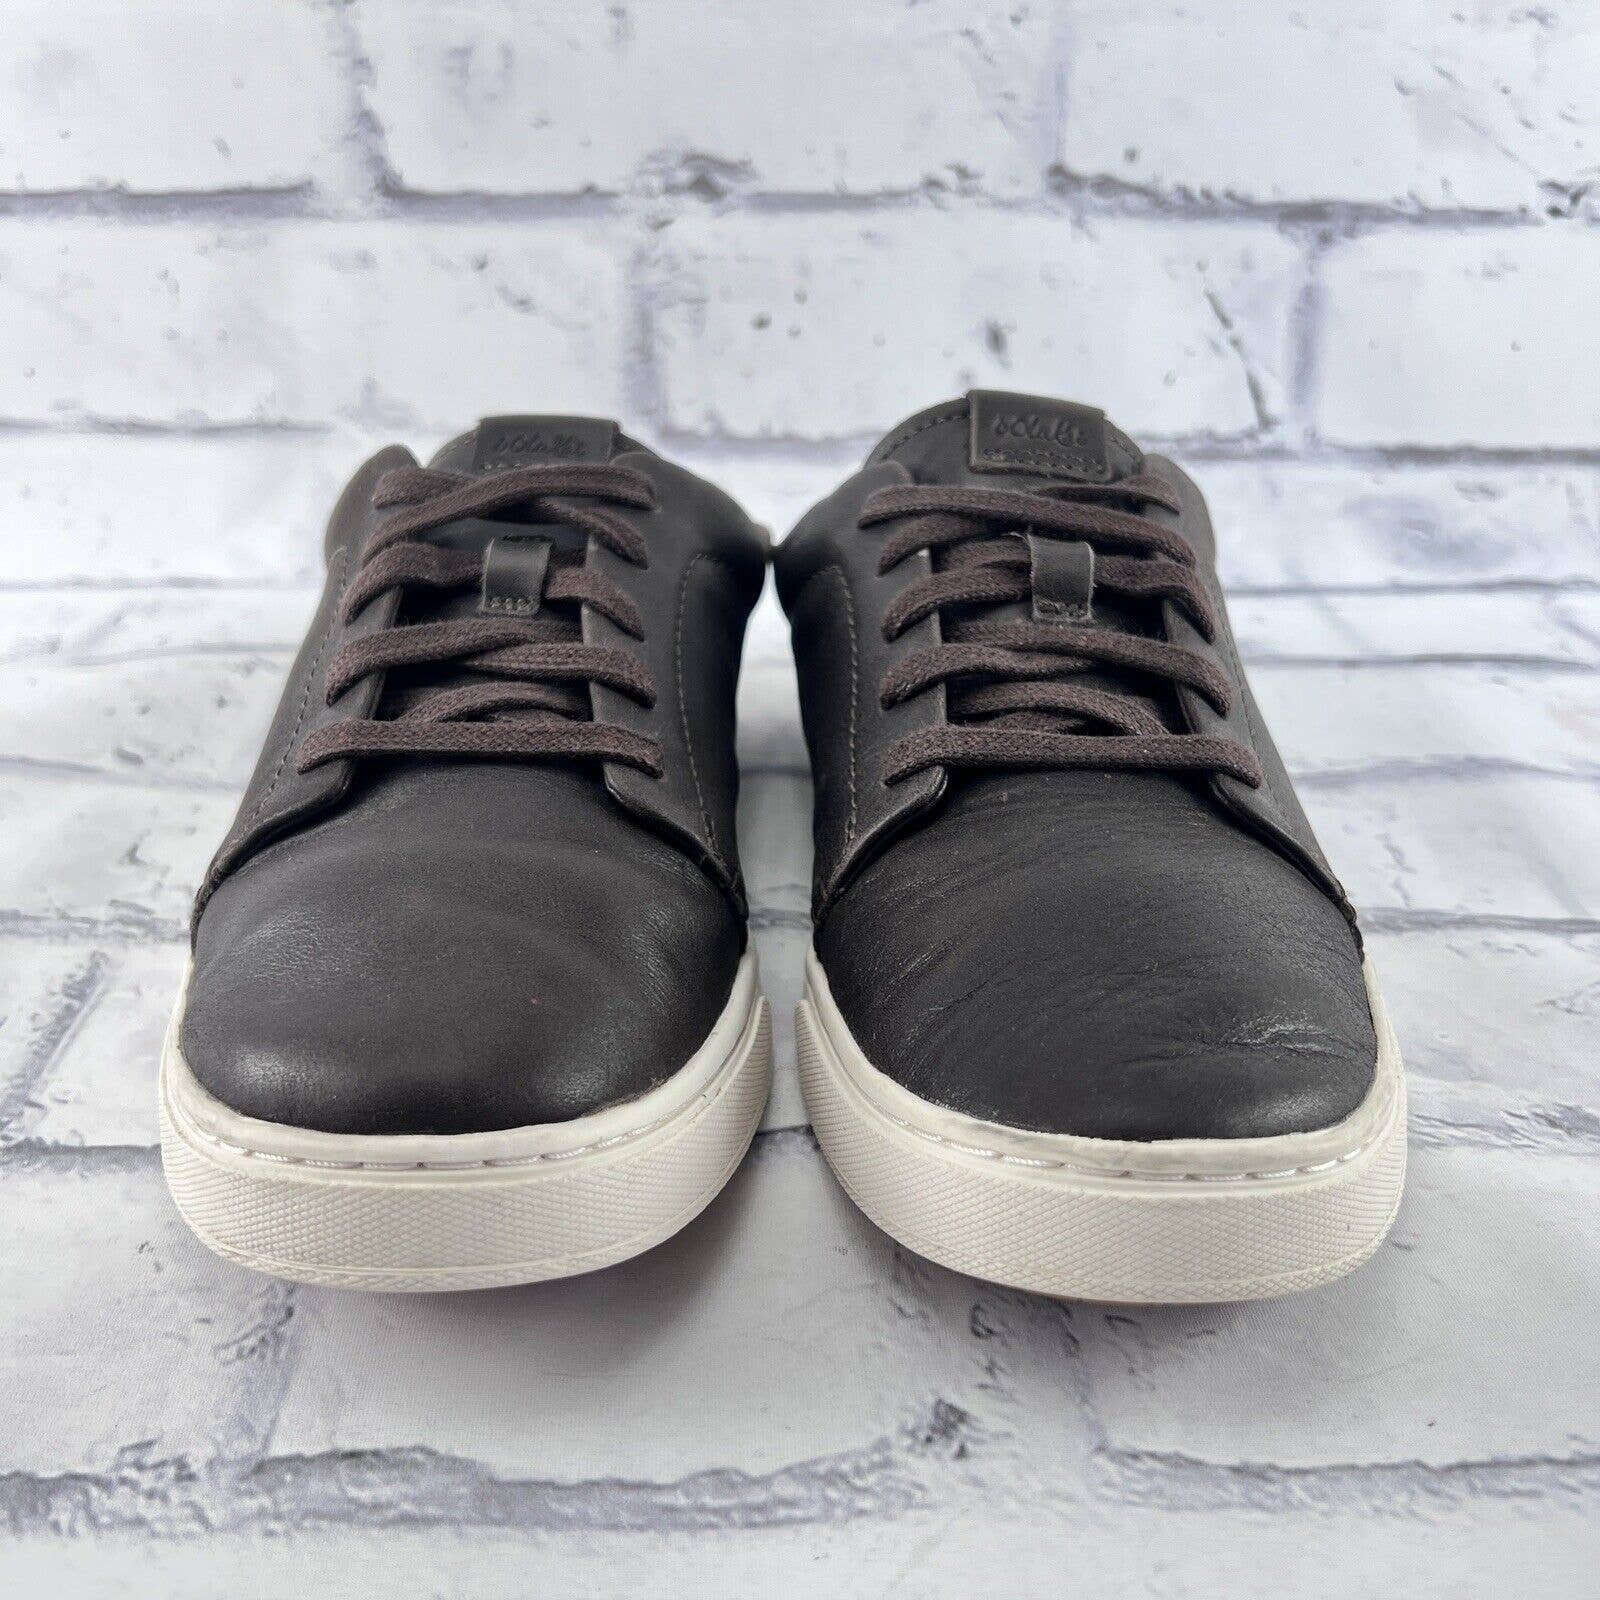 OLUKAI Pehuea Li 'ILI Leather Sneakers Womens Shoes Size 7 Slip On Brown Lace Up